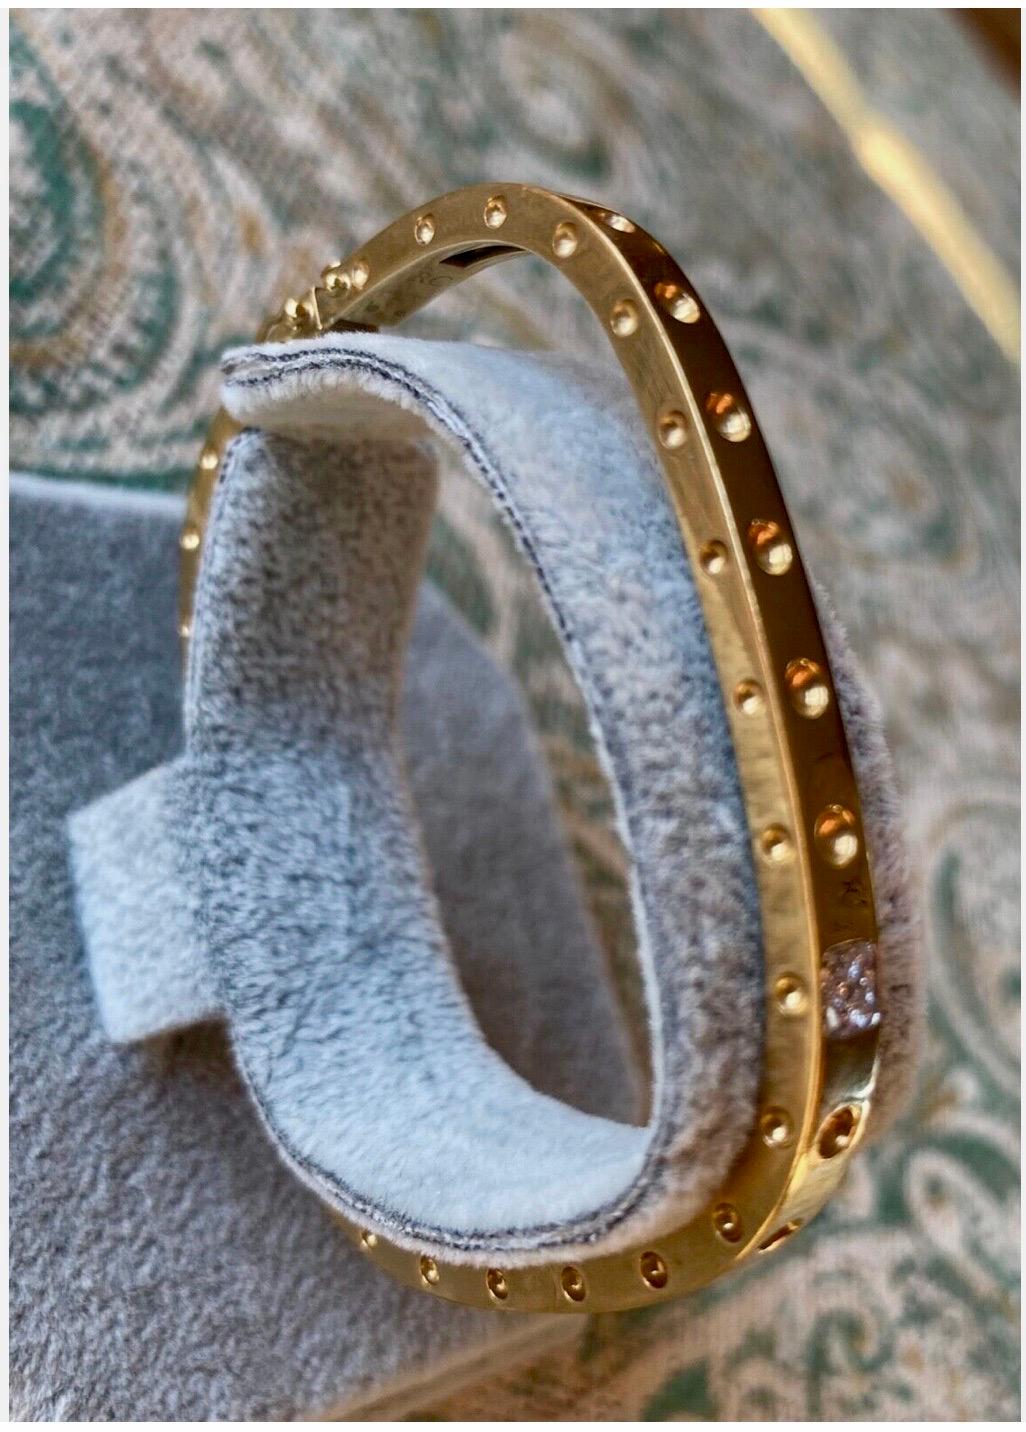 Roberto Coin Bracelet version of a Pois Moi bracelet.

 Roberto Coin 18k yellow Gold 

Pois Moi diamond Bangle Bracelet

Original  box 

Estate/ Used /Excellent condition.

0.07 diamond

Size up 6.5